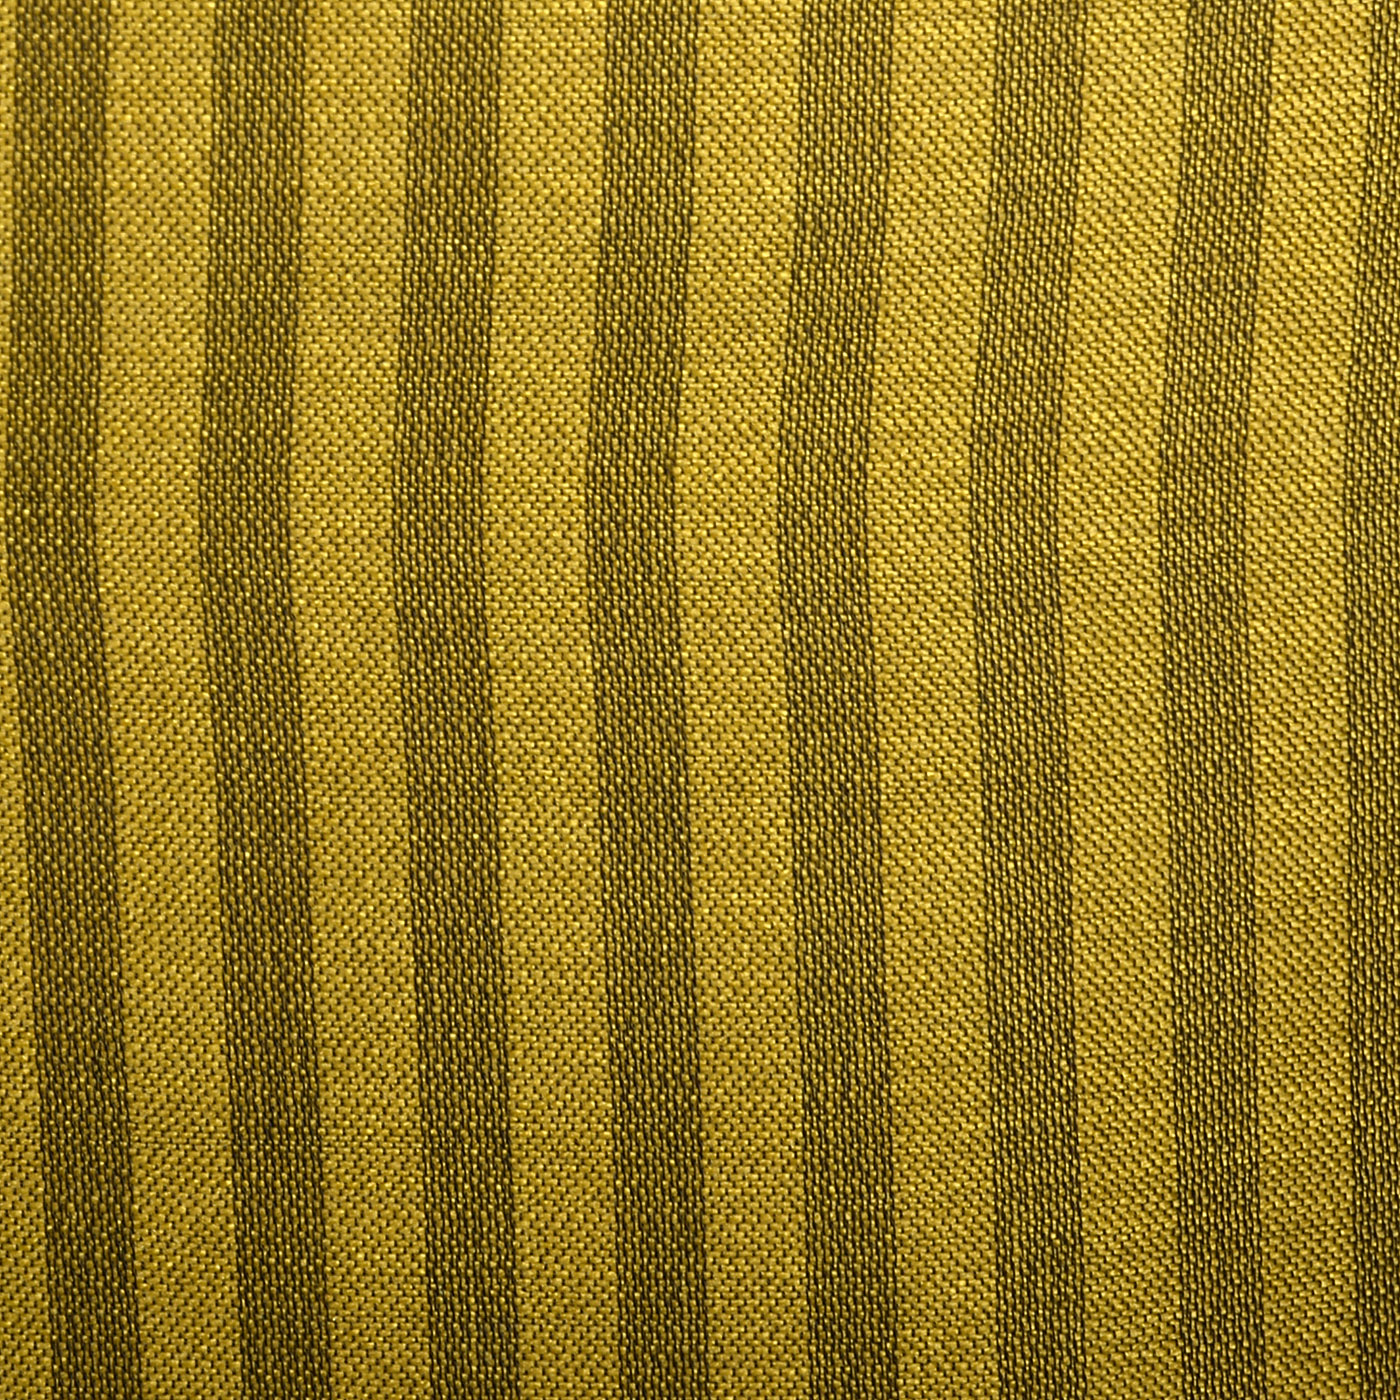 1960s Gold Stripe Jacket